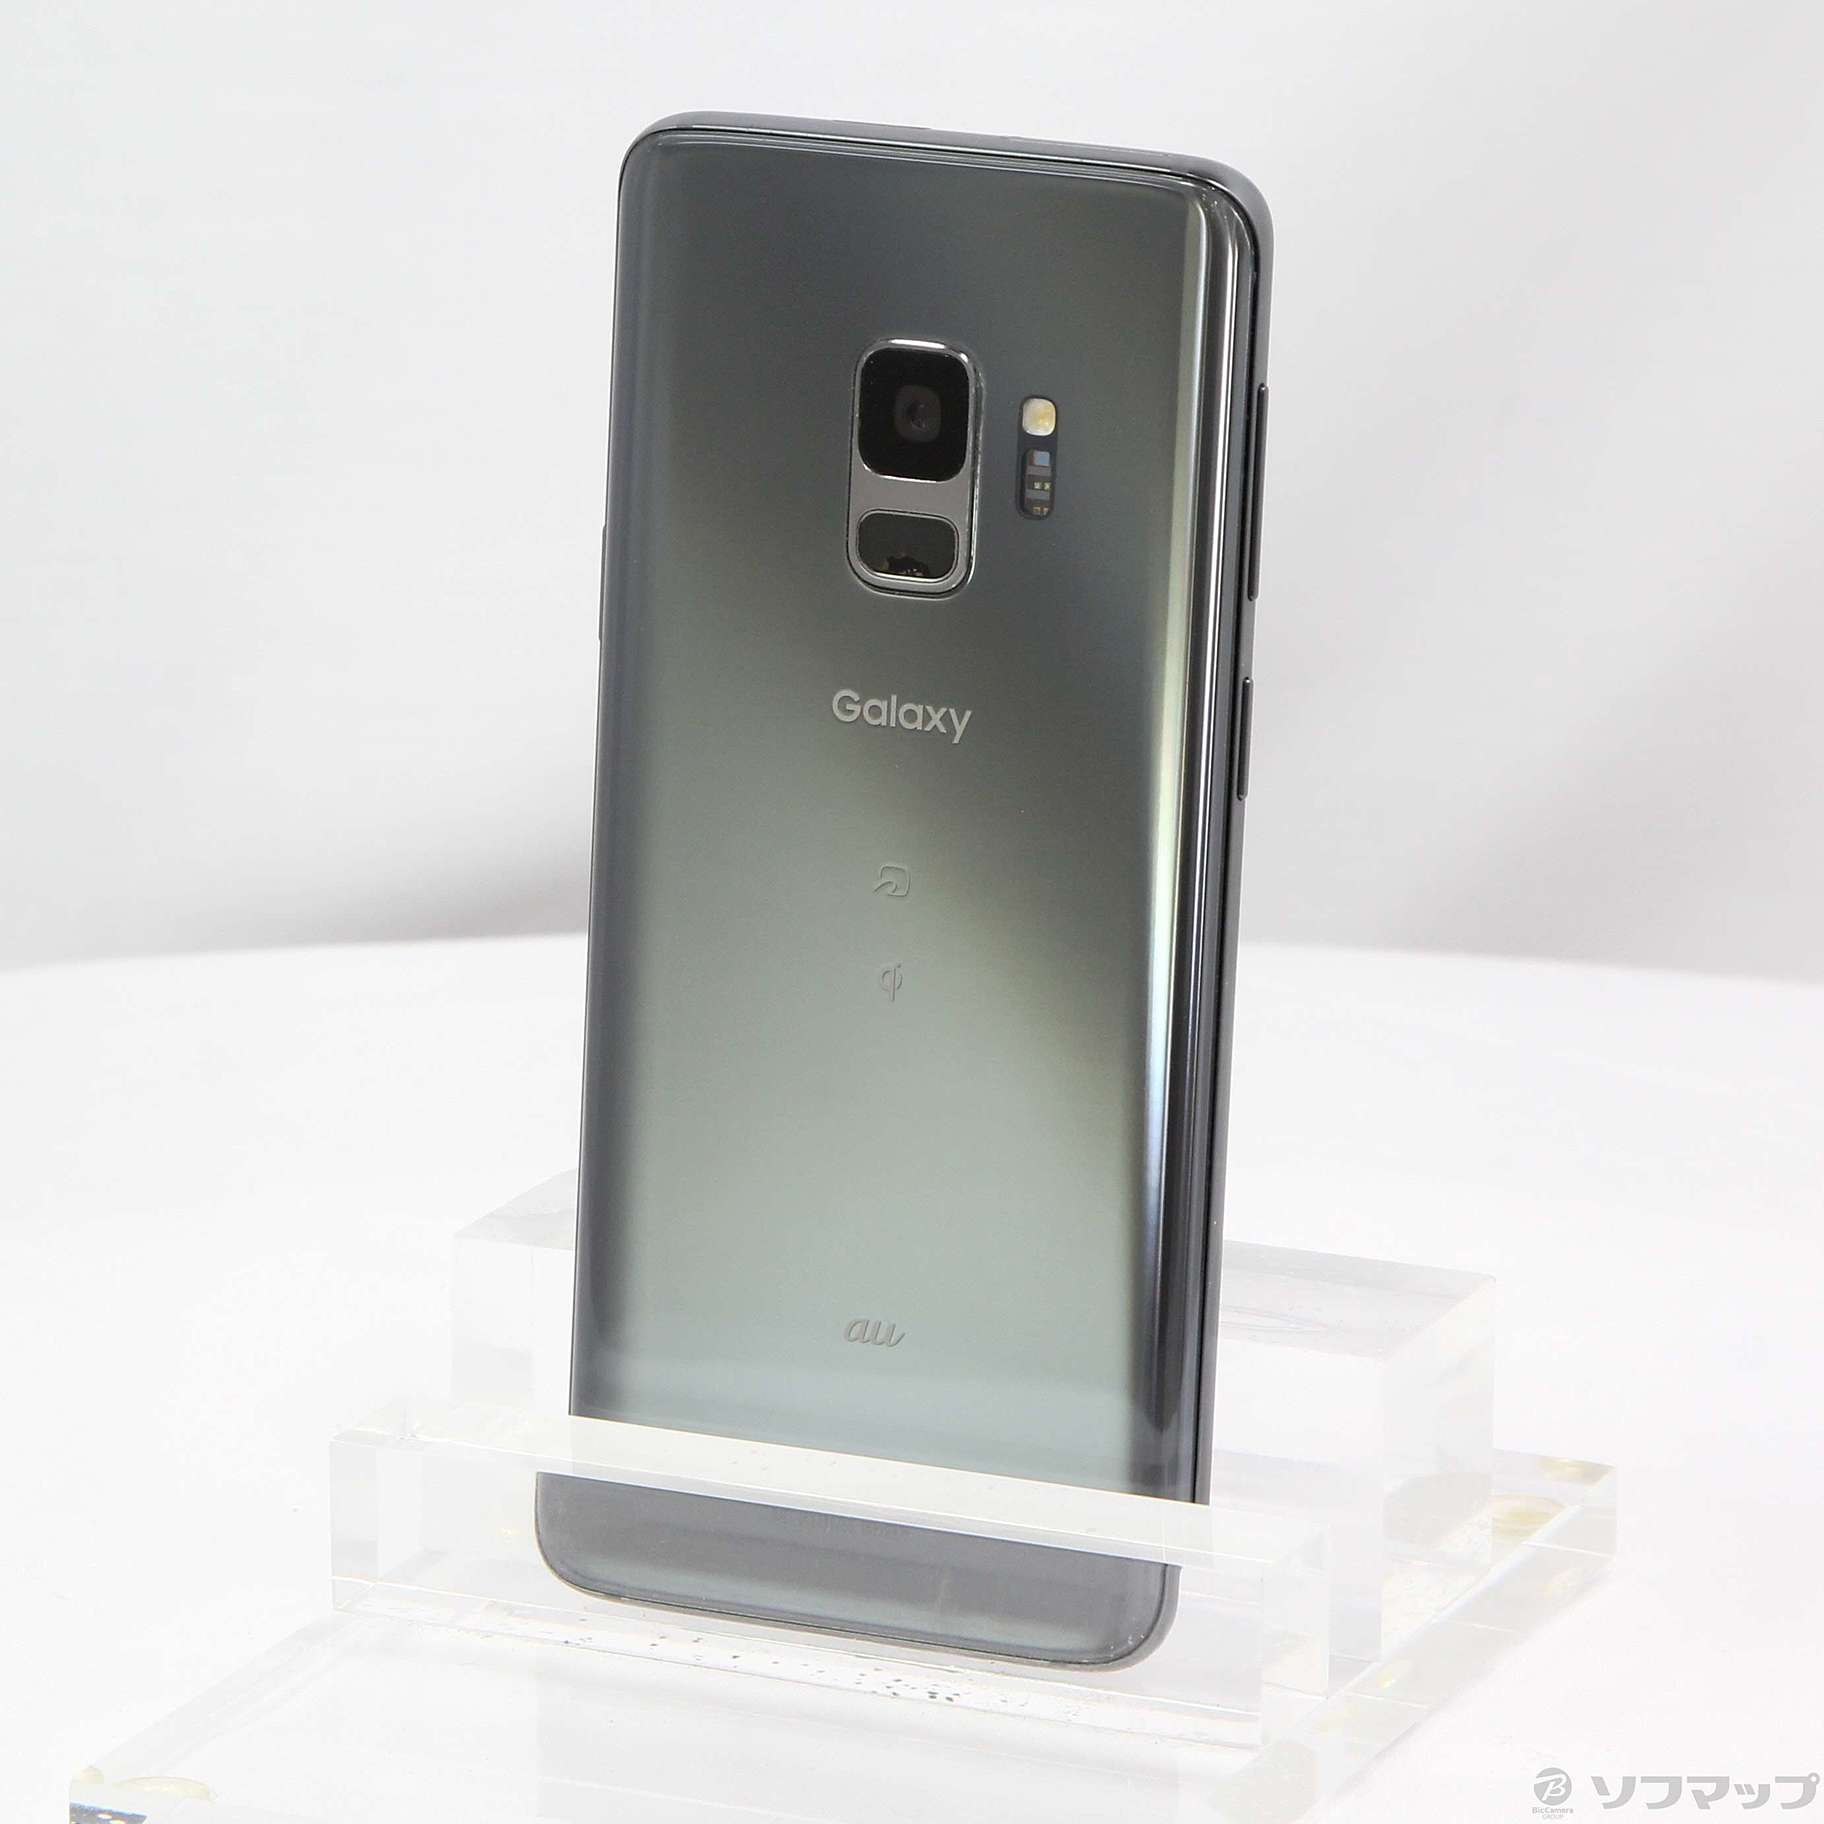 Galaxy S9 Titanium Gray 64 GB au